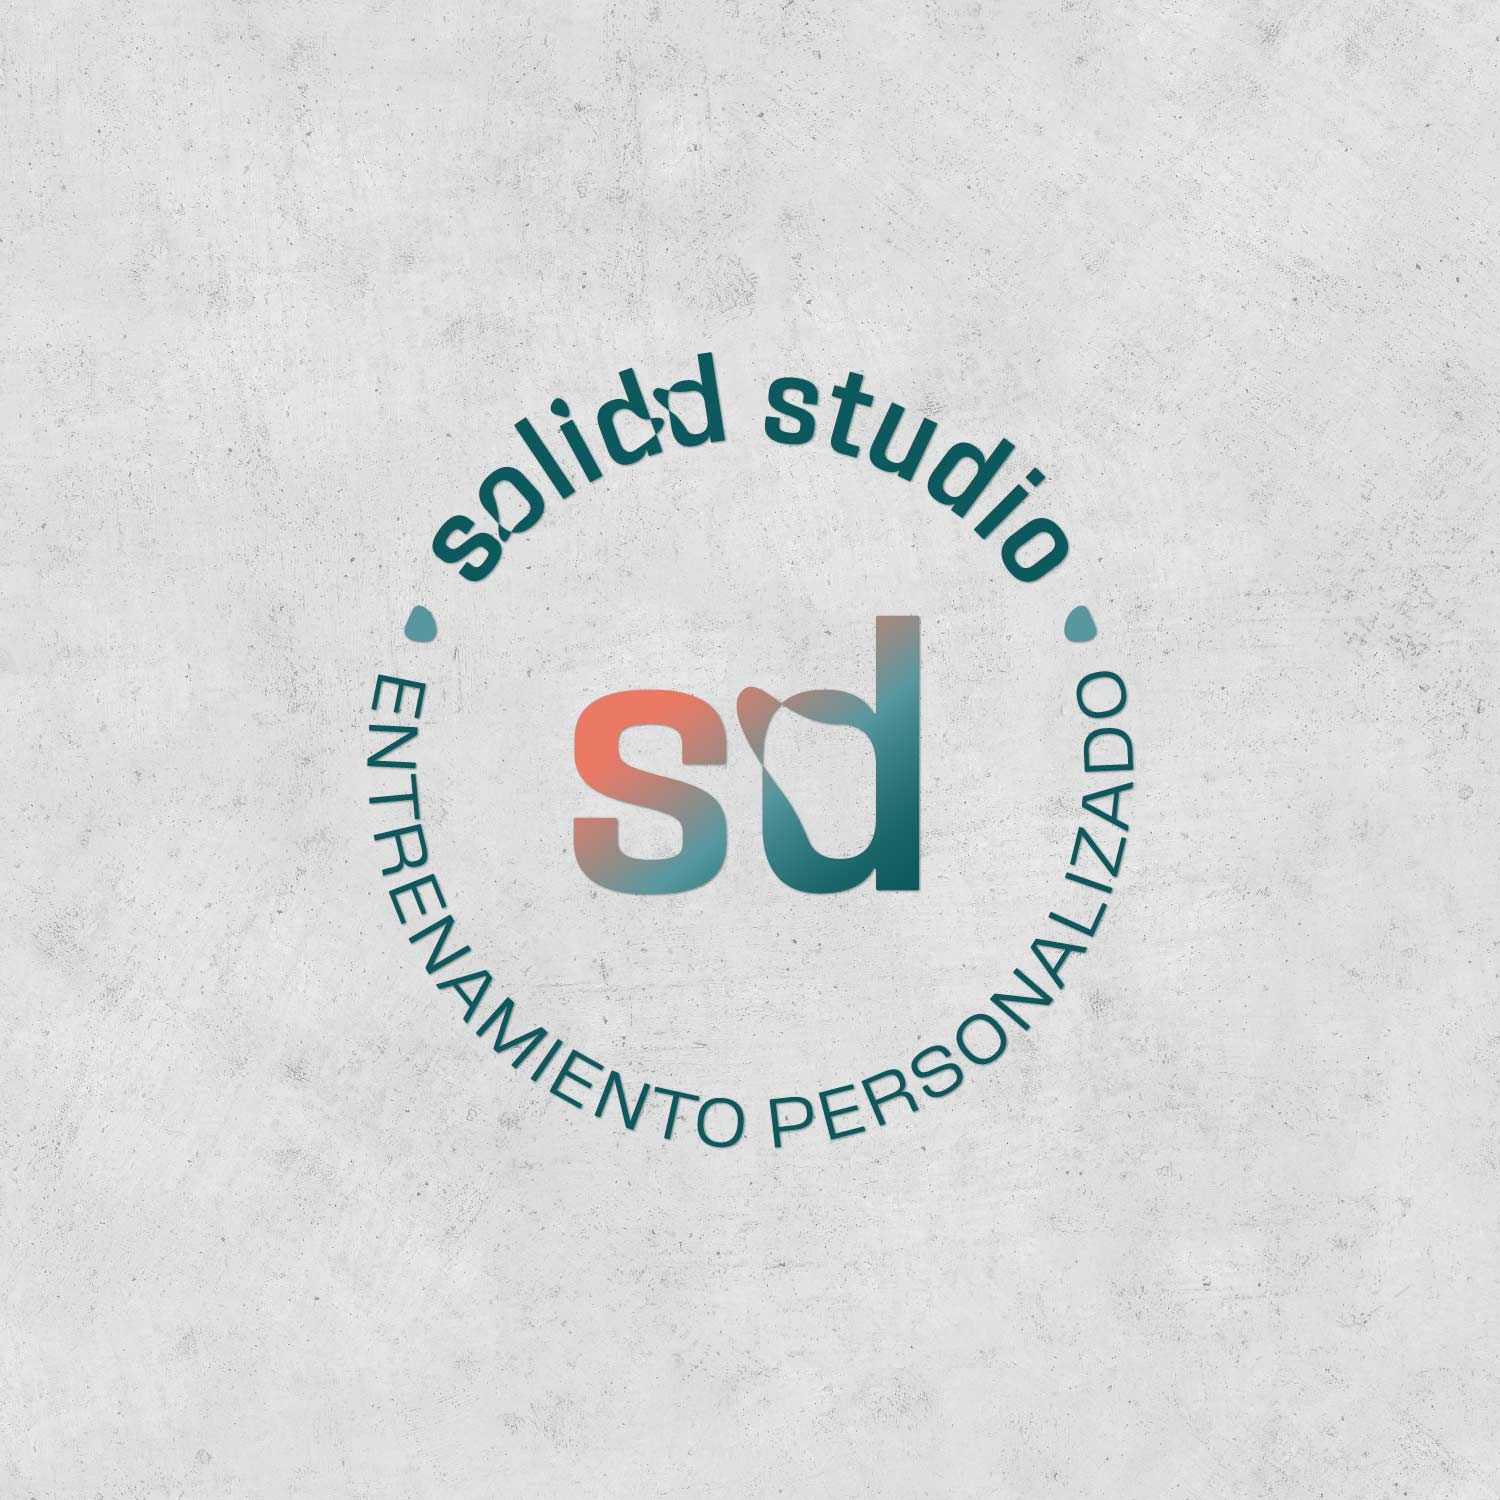 Croqueta Studio - Branding - Solidd Studio - Logo redondo